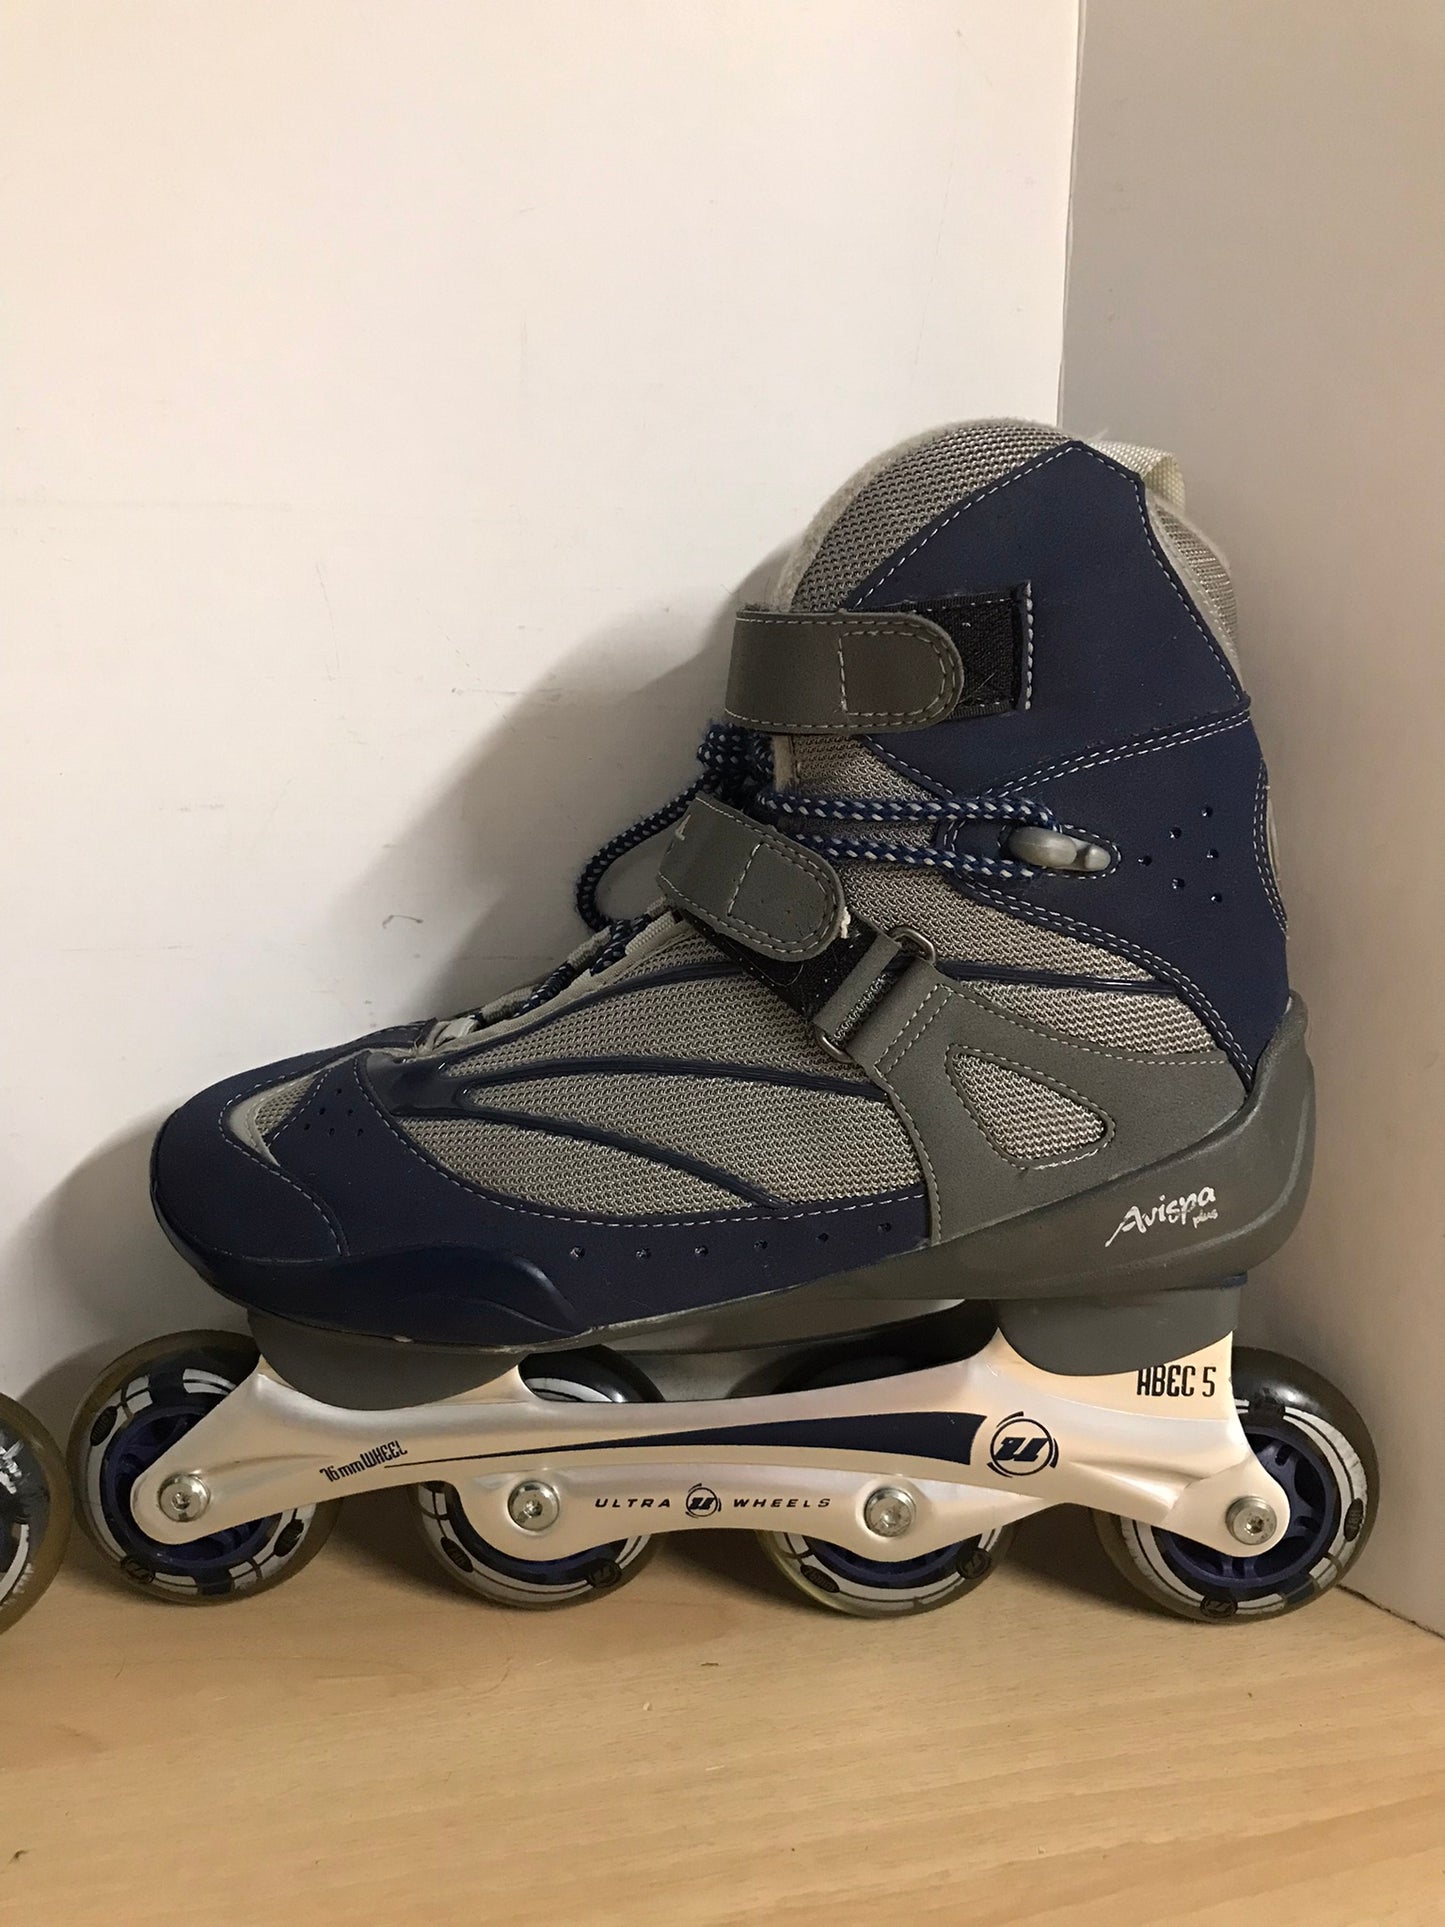 Inline Roller Skates Ladies Size 10 Ultra Wheels Denim Blue Grey Rubber Wheels New Demo Model